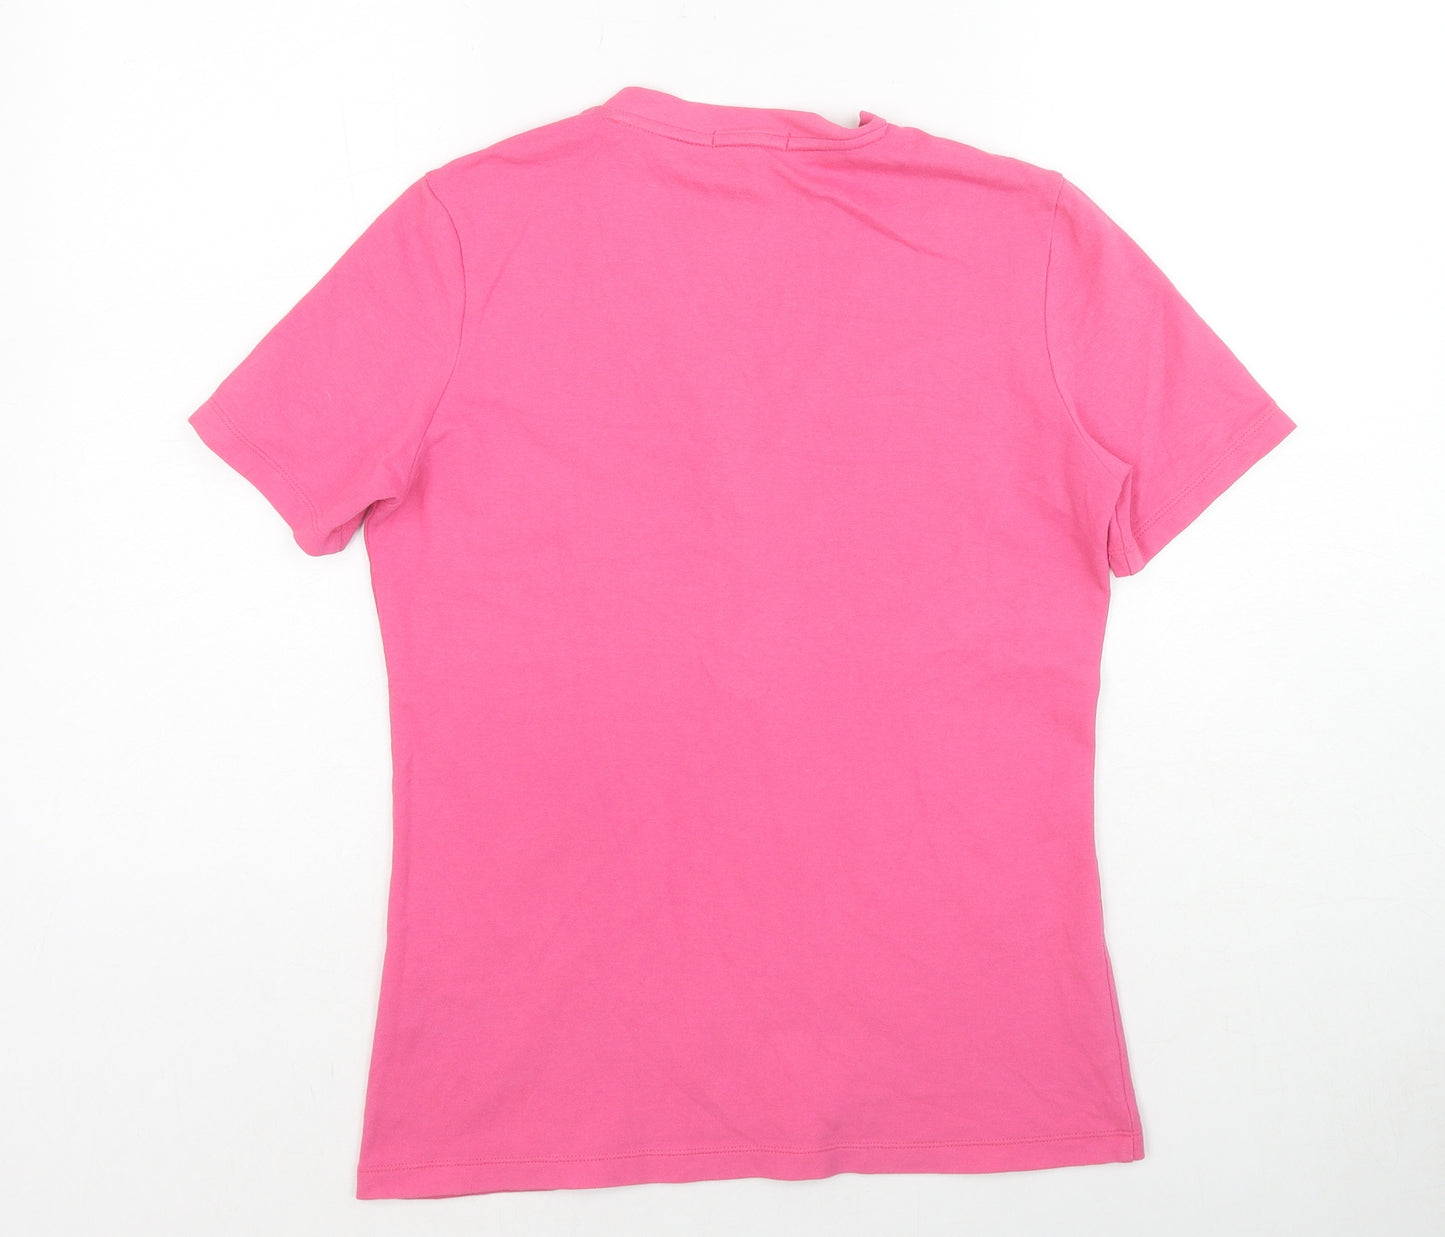 Geox Womens Pink Cotton Basic T-Shirt Size M V-Neck